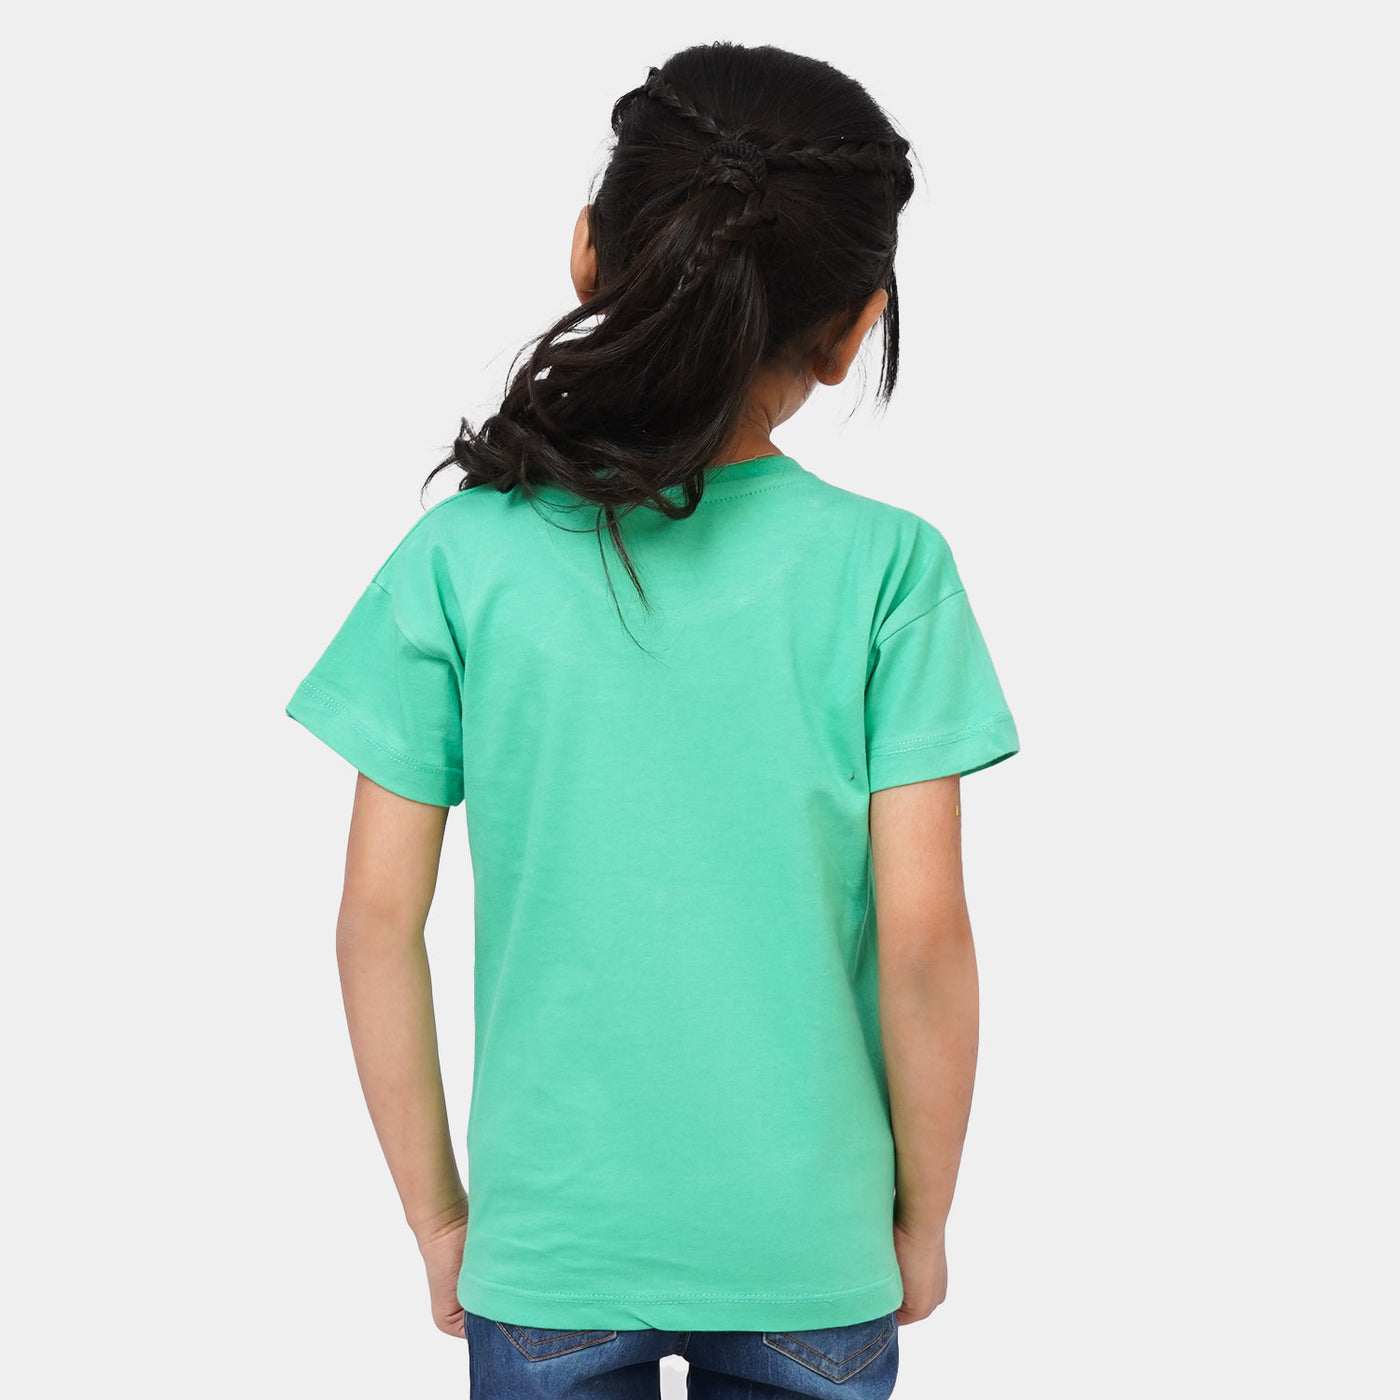 Girls Cotton T-Shirt Pretty Day - Green